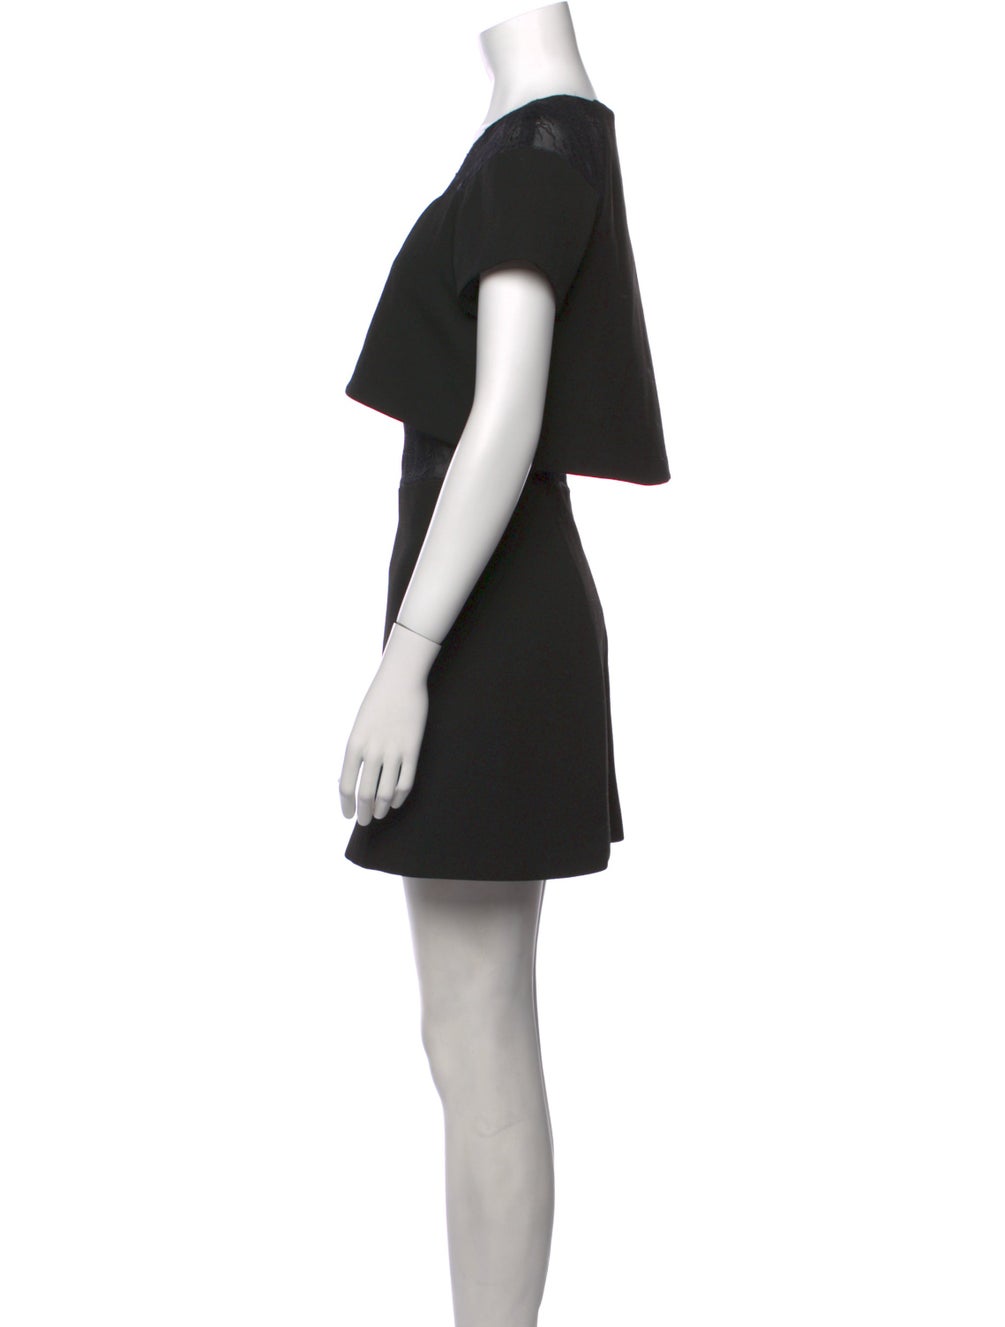 MAJE black short sleeve dress with lace panel